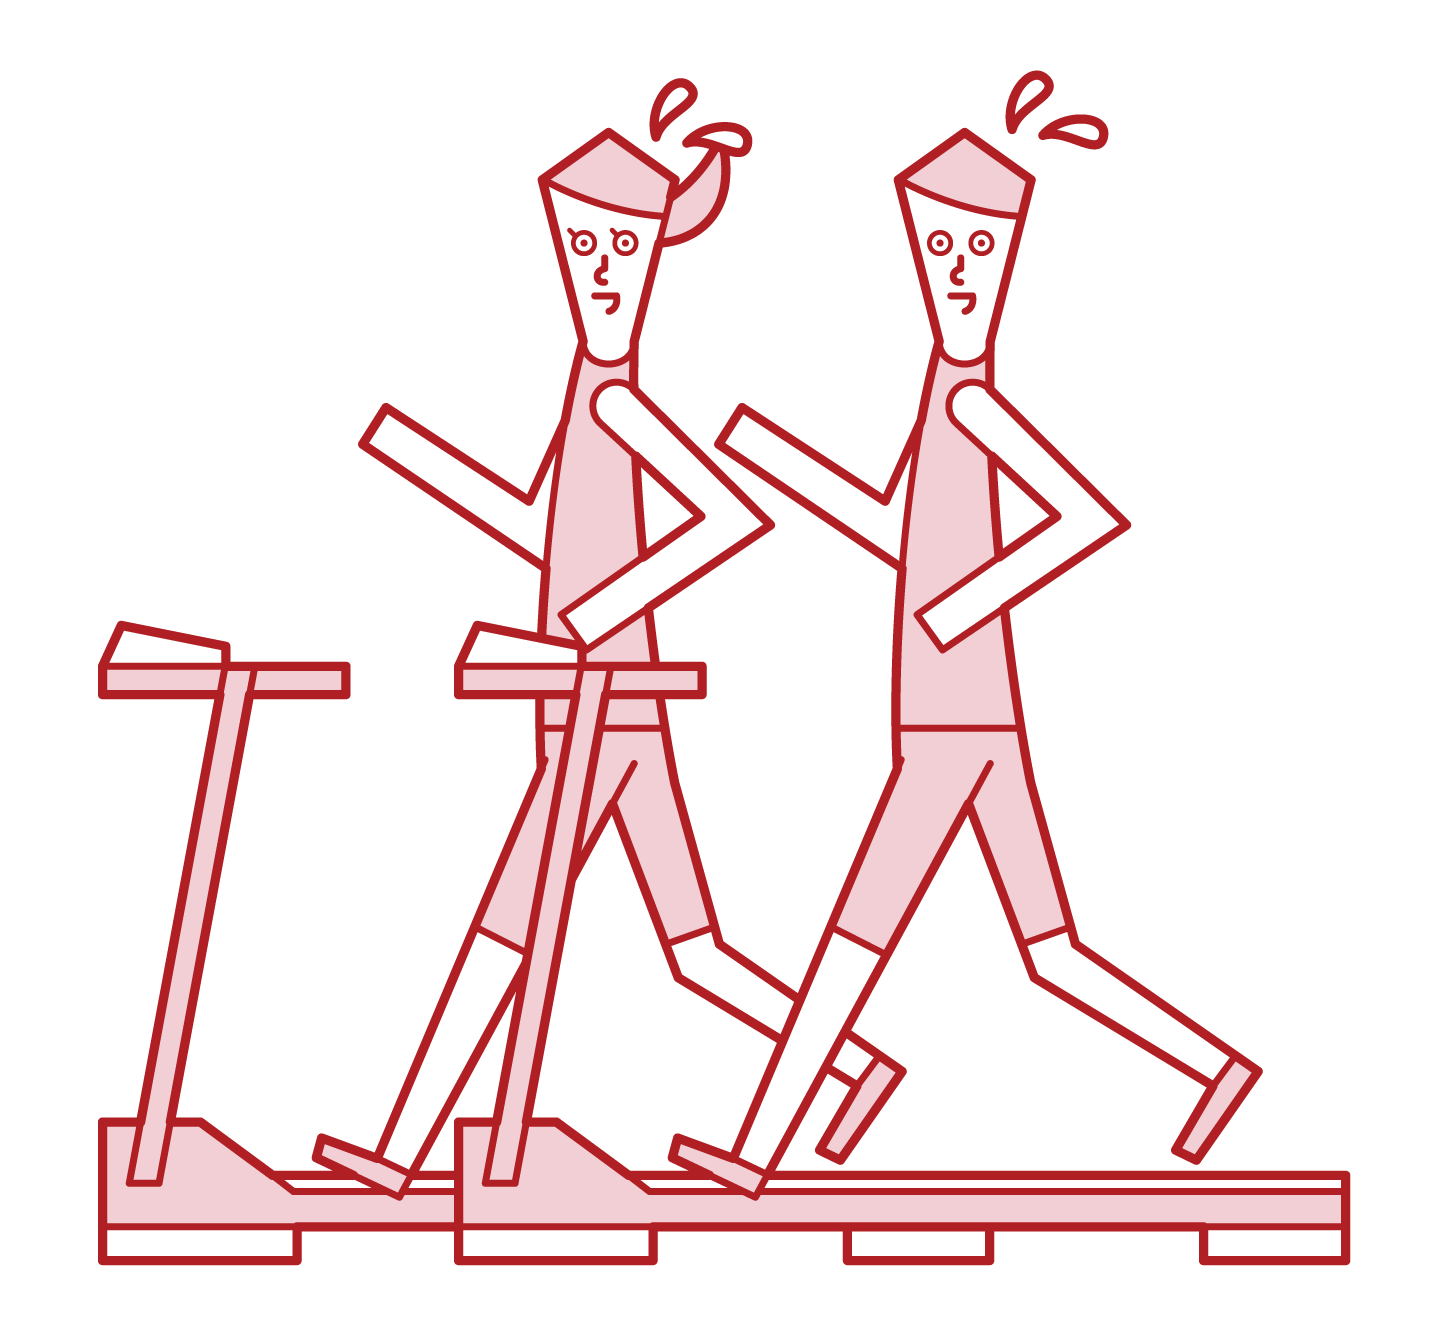 Illustration of people running on a running machine